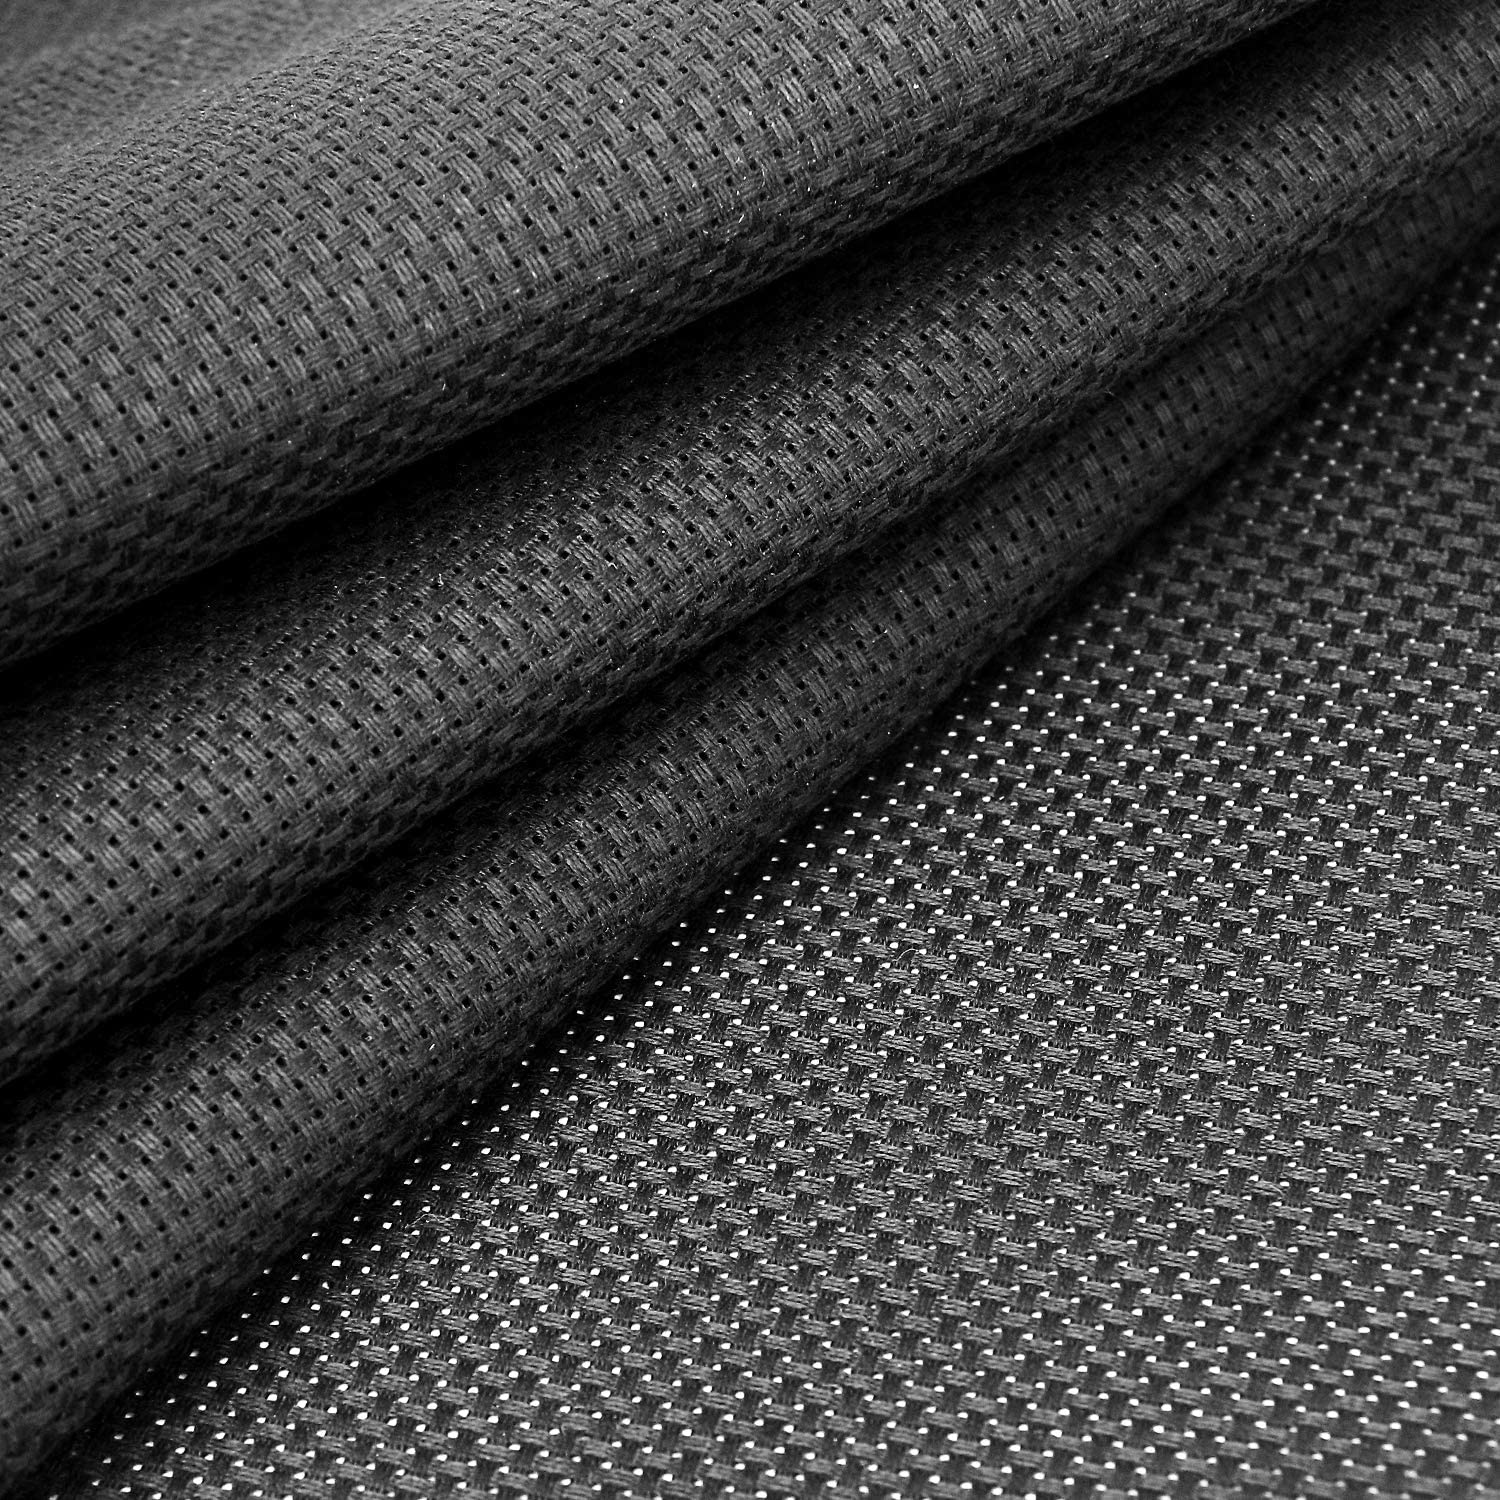 Maydear Cross Stitch Cloth 11 Count Cotton Aida Fabric Needlework DIY 6 Pieces 12×18（inch）-Black(6pcs) - image 2 of 3